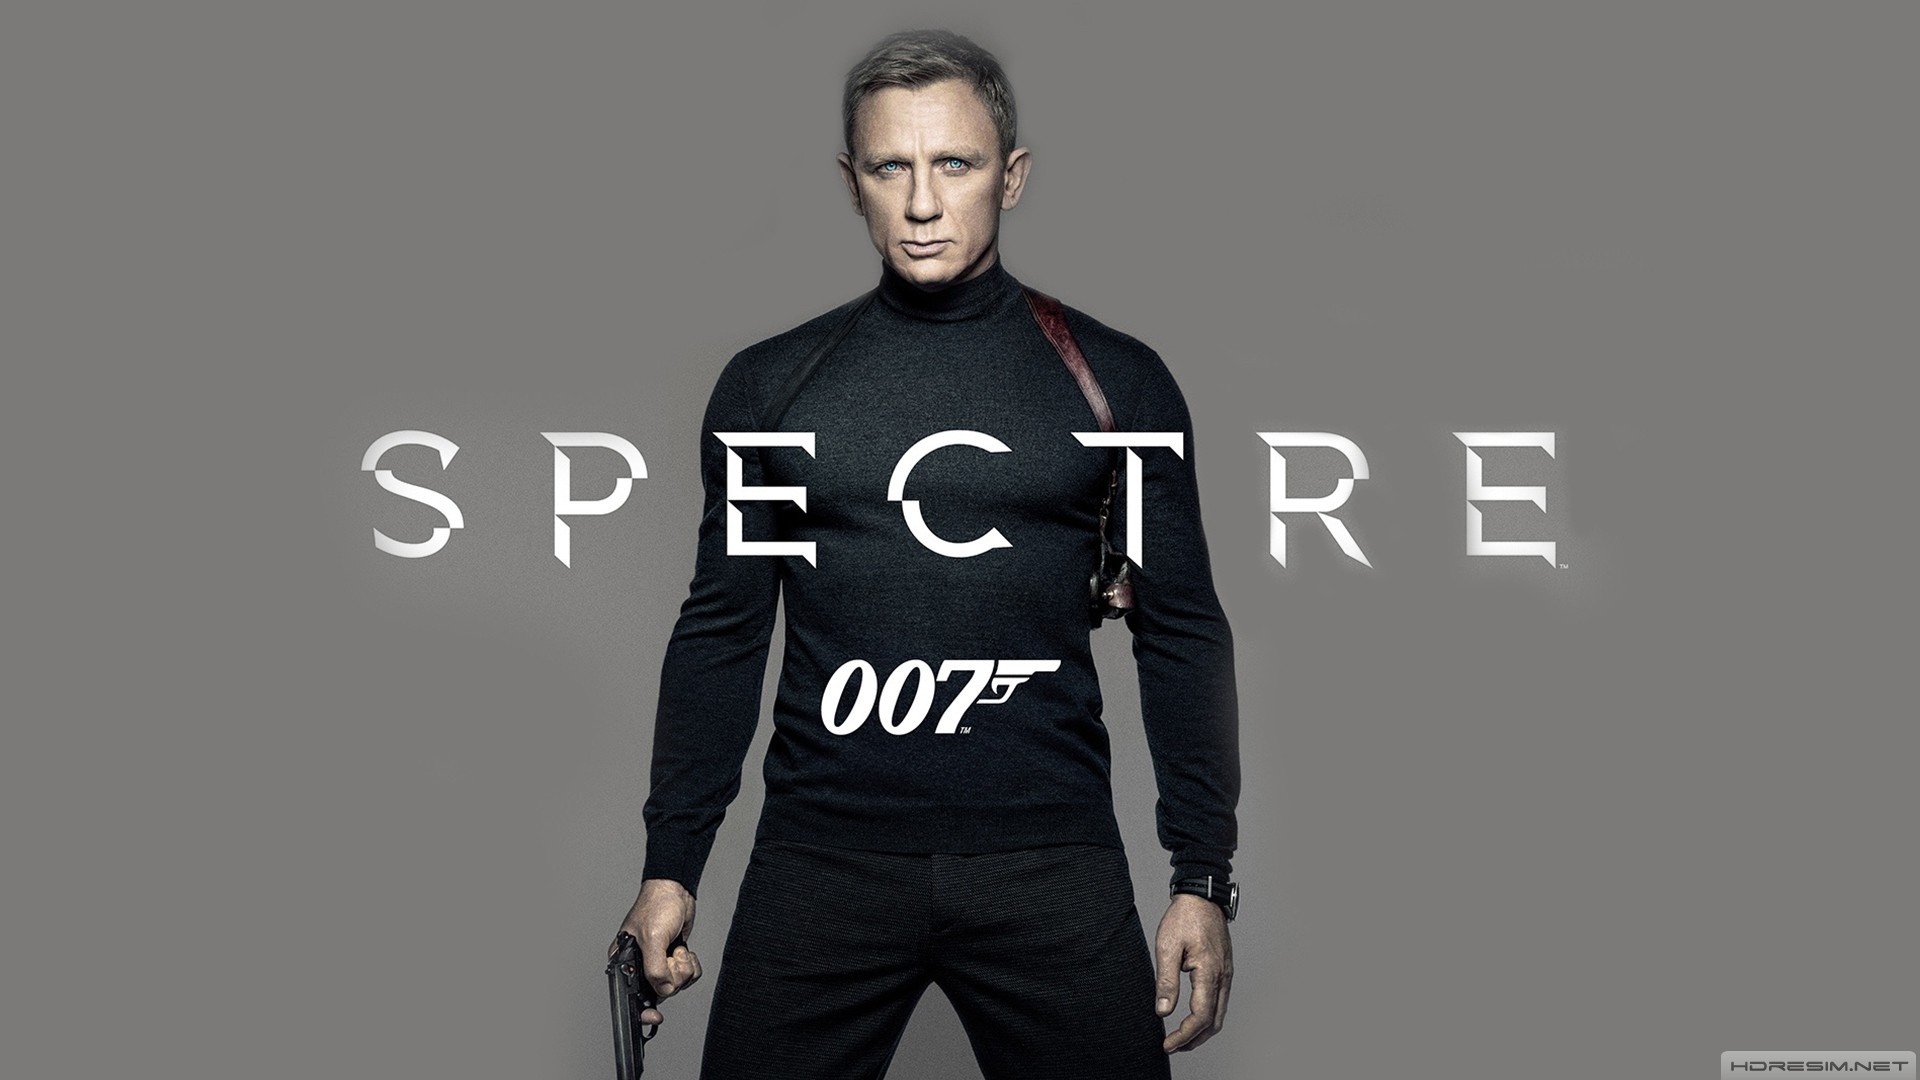 james bond,007,spectre,daniel craig